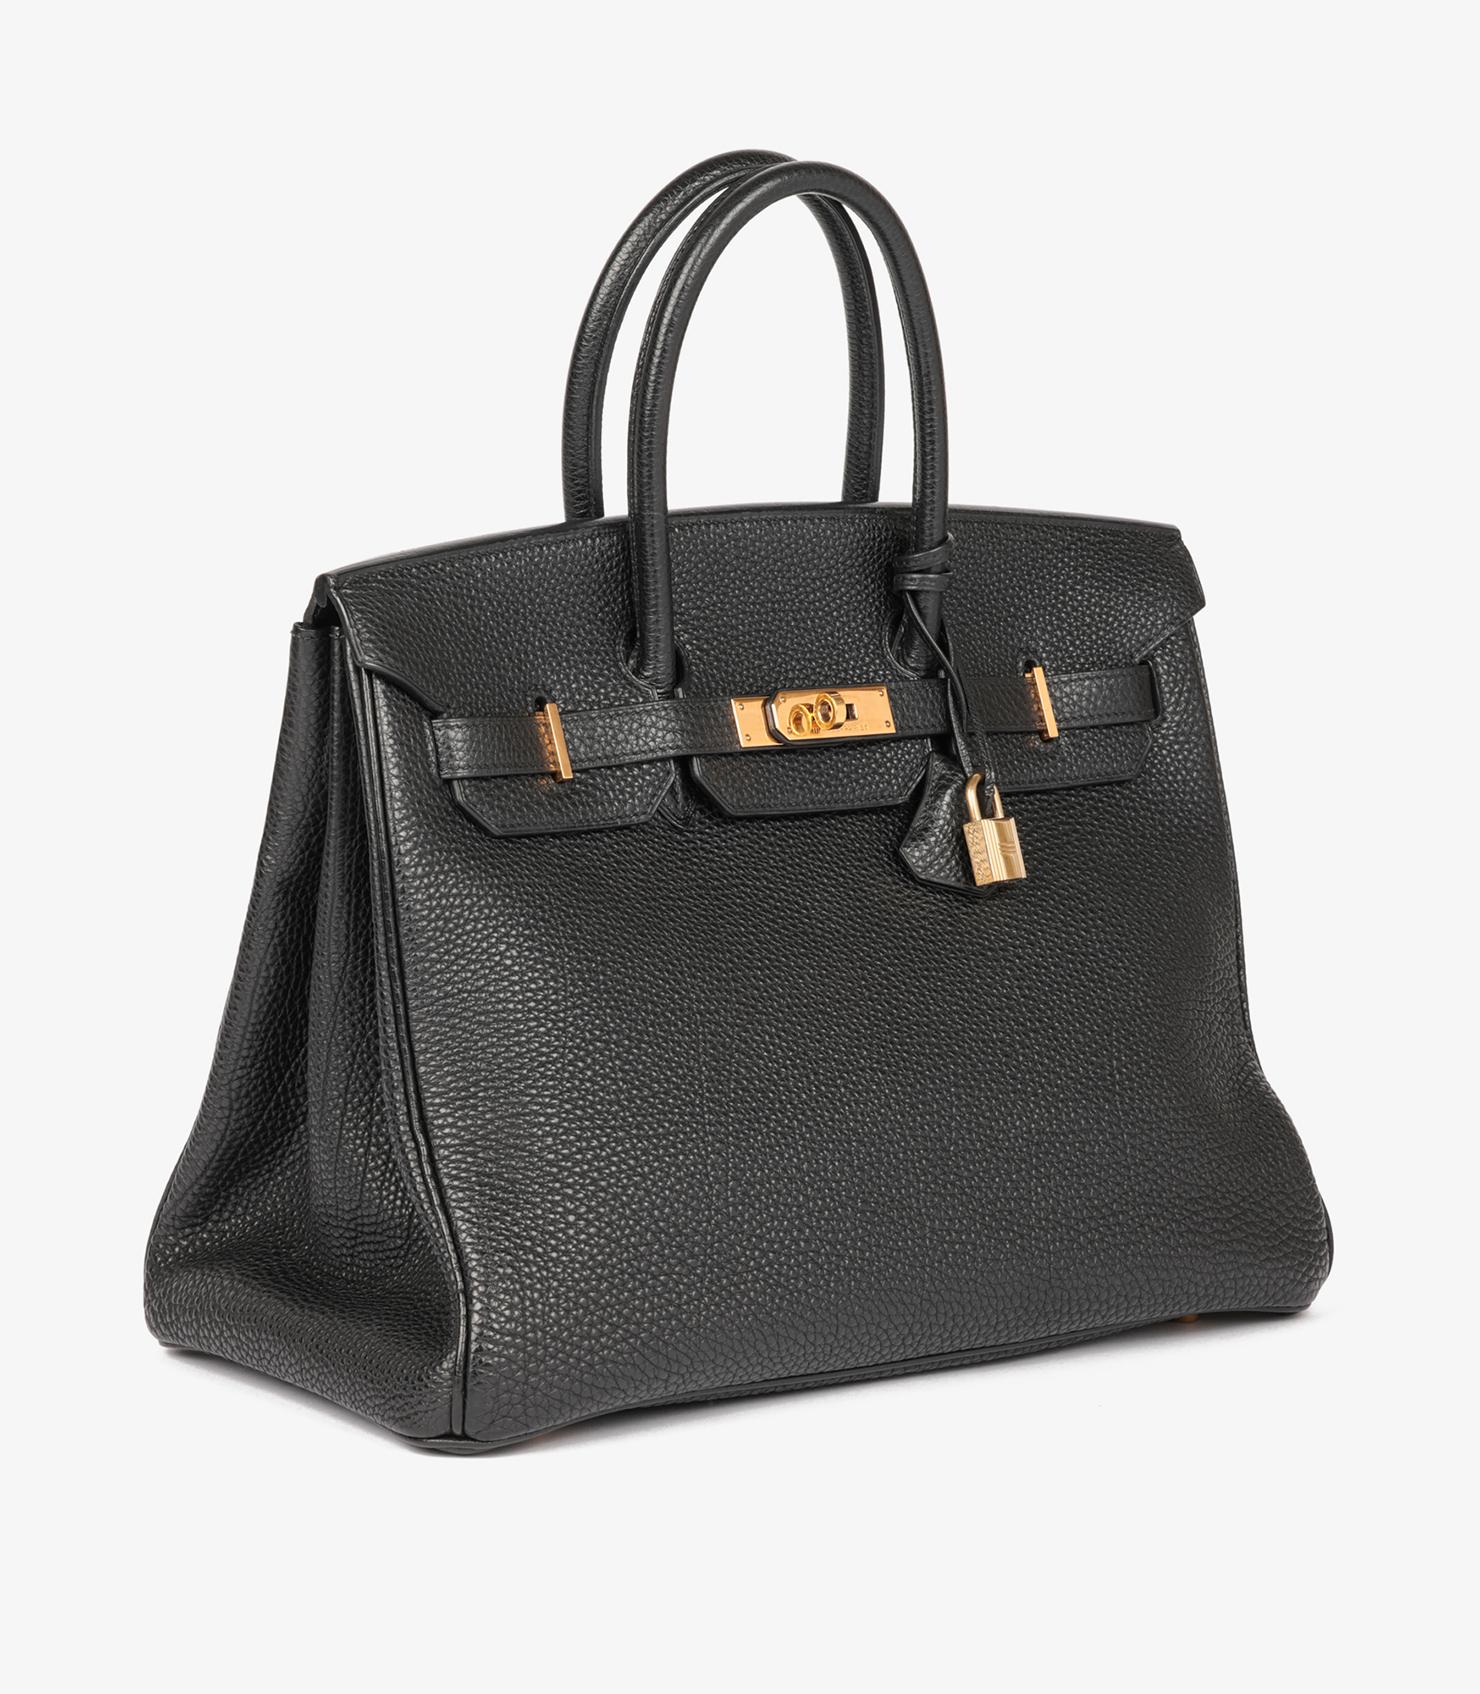 Hermès Black Togo Leather Birkin 35cm 7